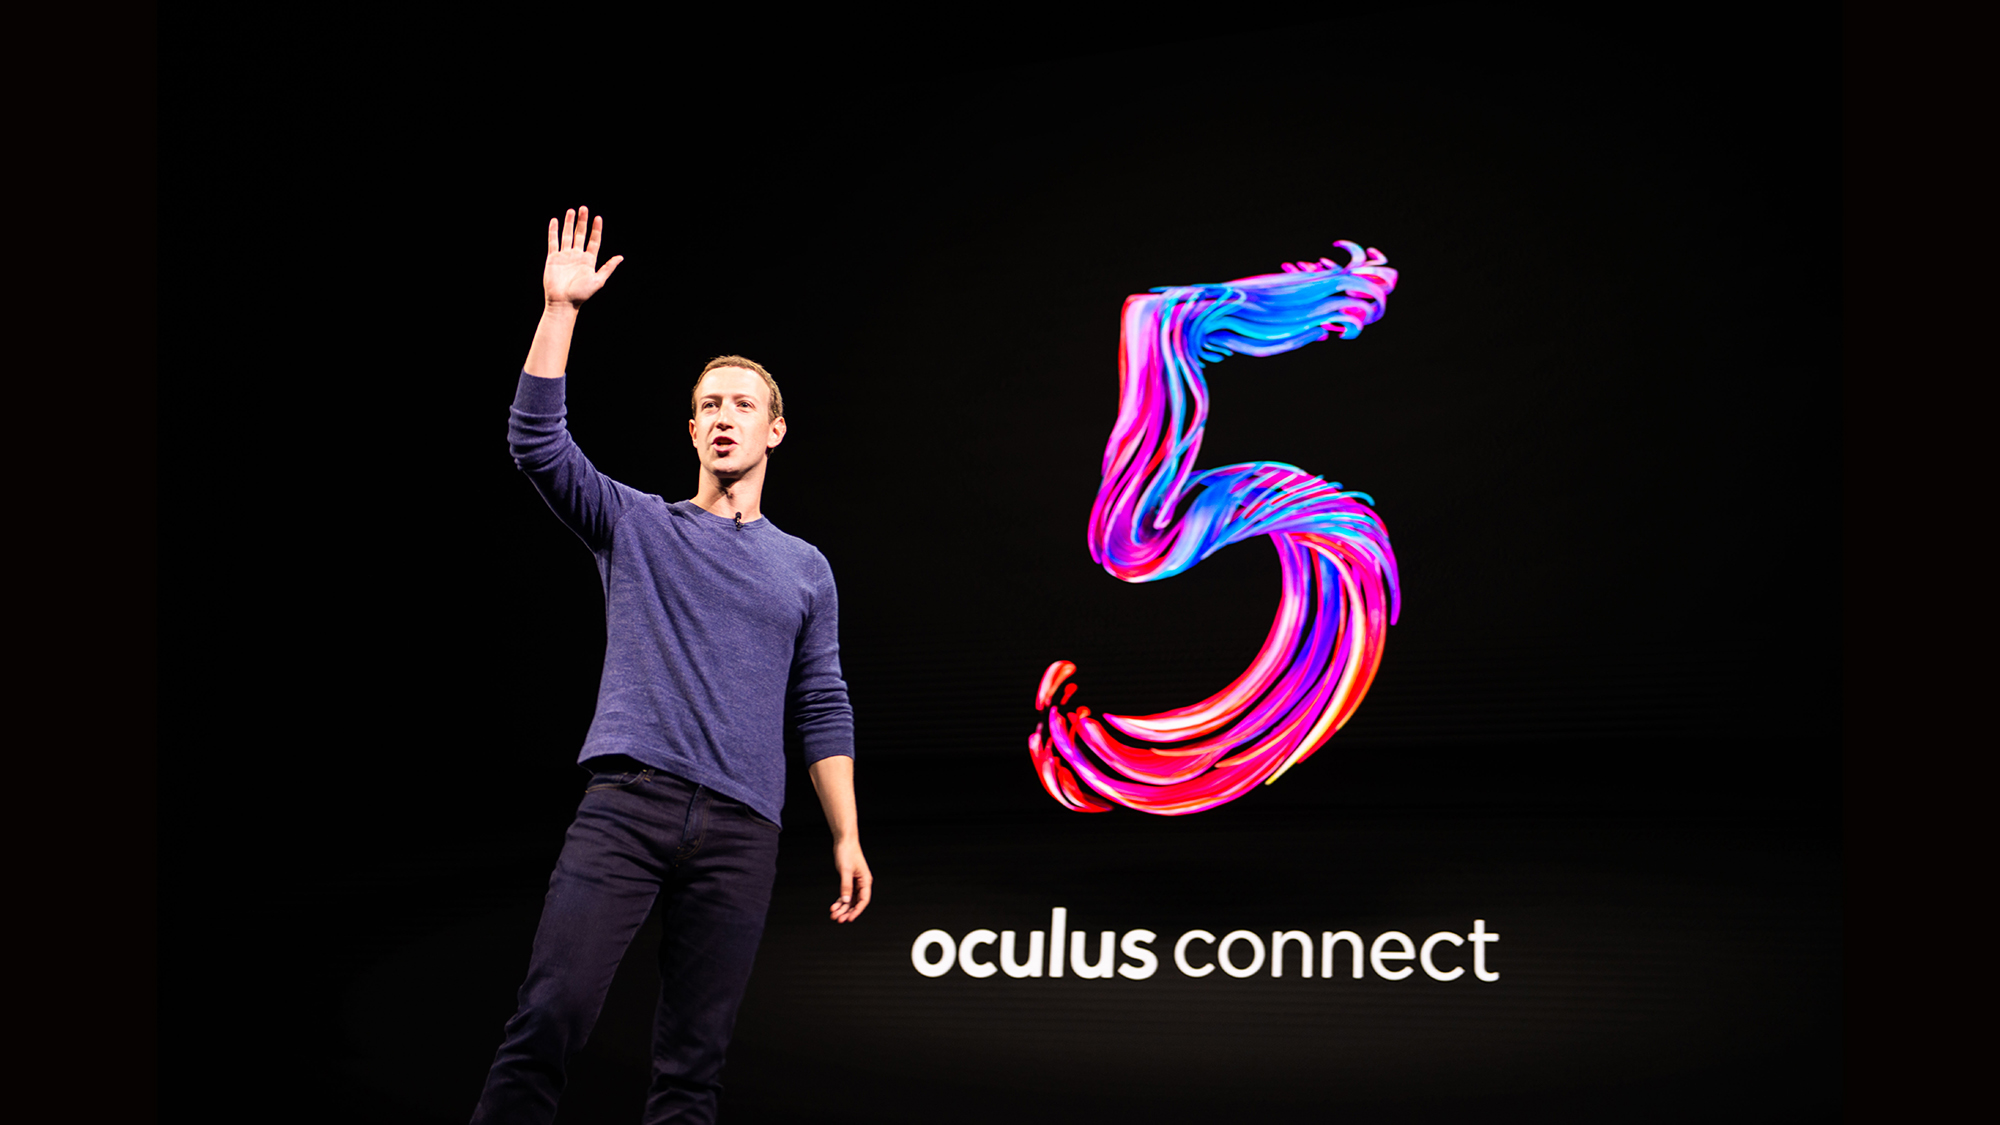 Oculus Connect 5: Tech talks roundup on engineering.fb.com, Facebook's Engineering blog